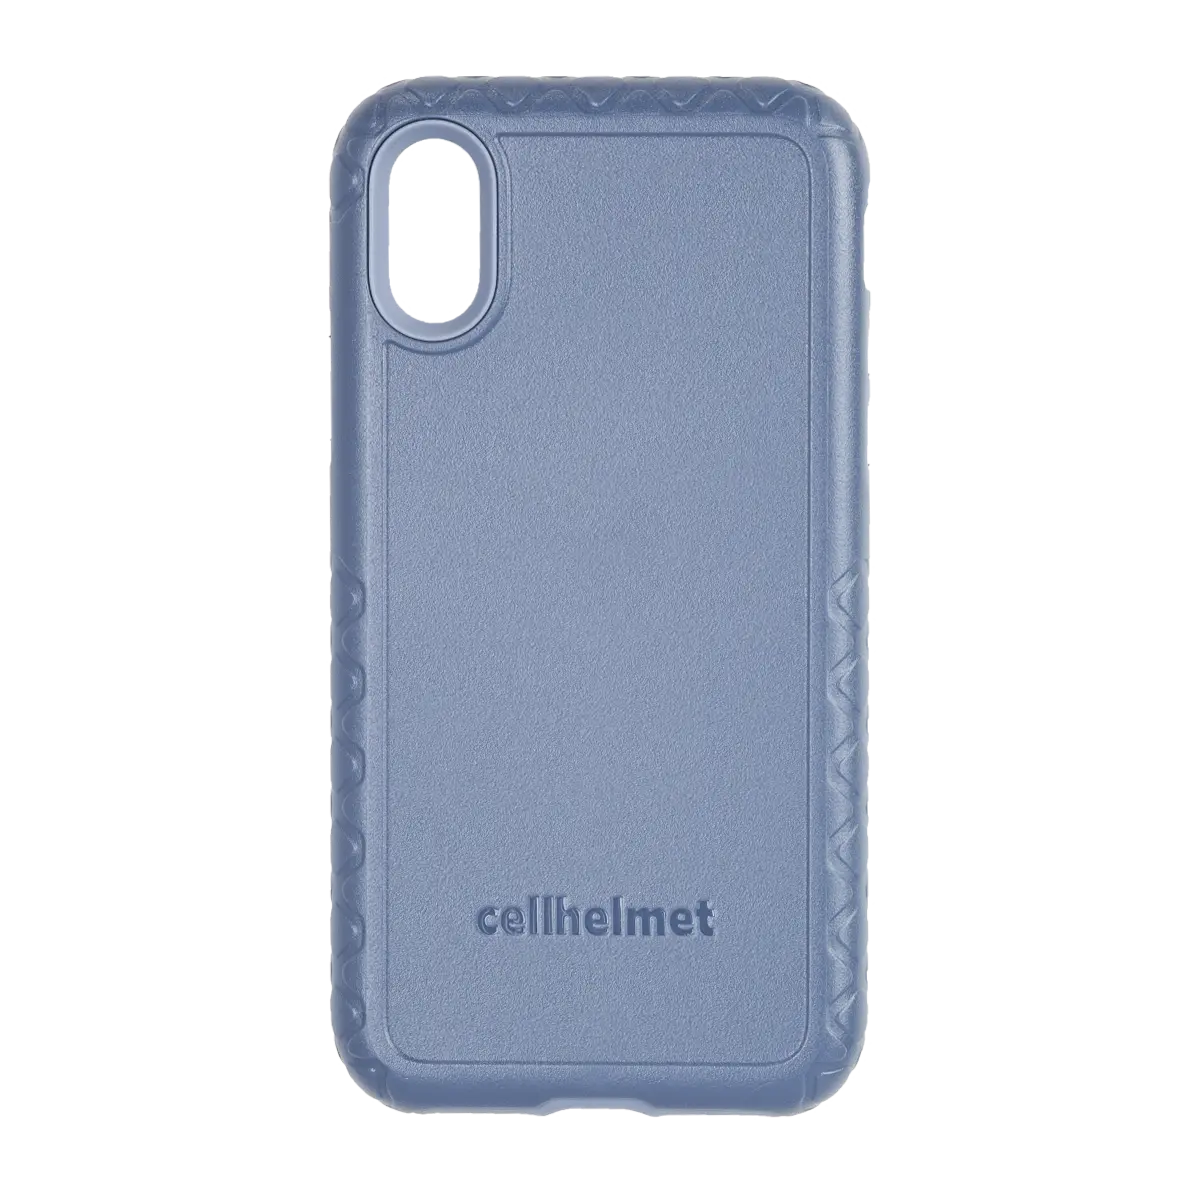 Blue cellhelmet Customizable Case for iPhone XR